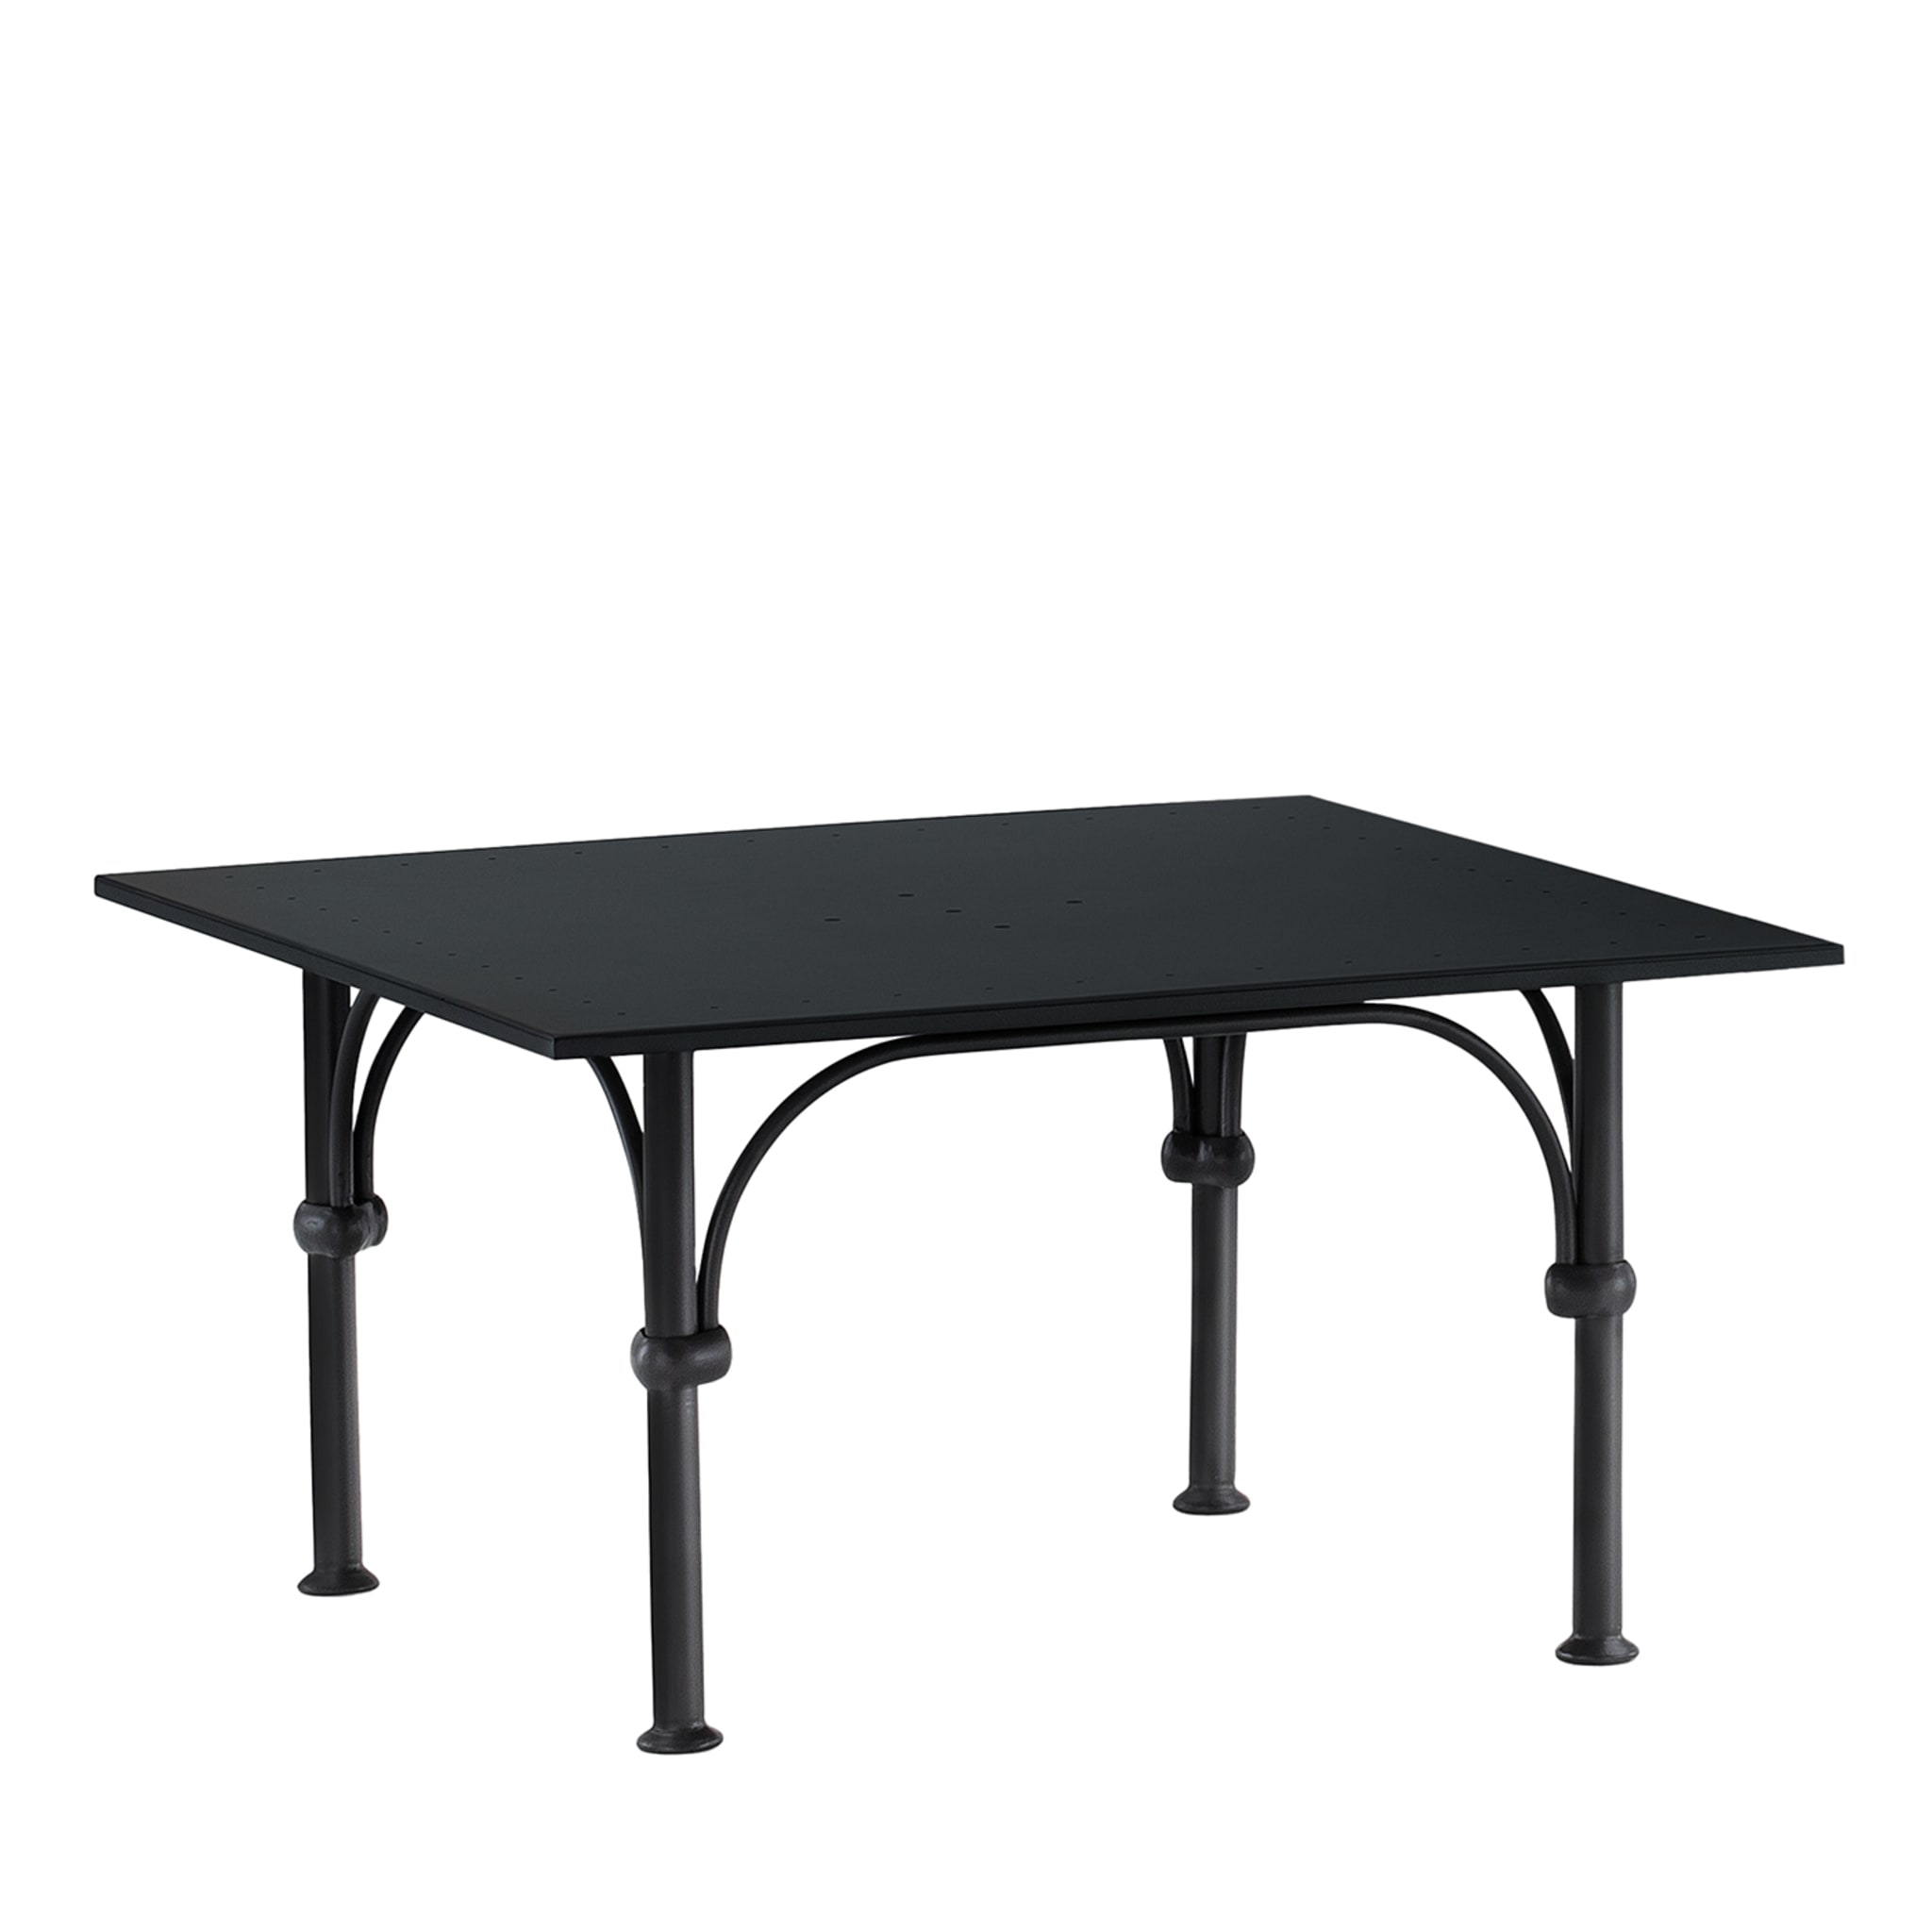 Tavolario Wrought Iron Anthracite-Gray Square Coffee Table - Main view